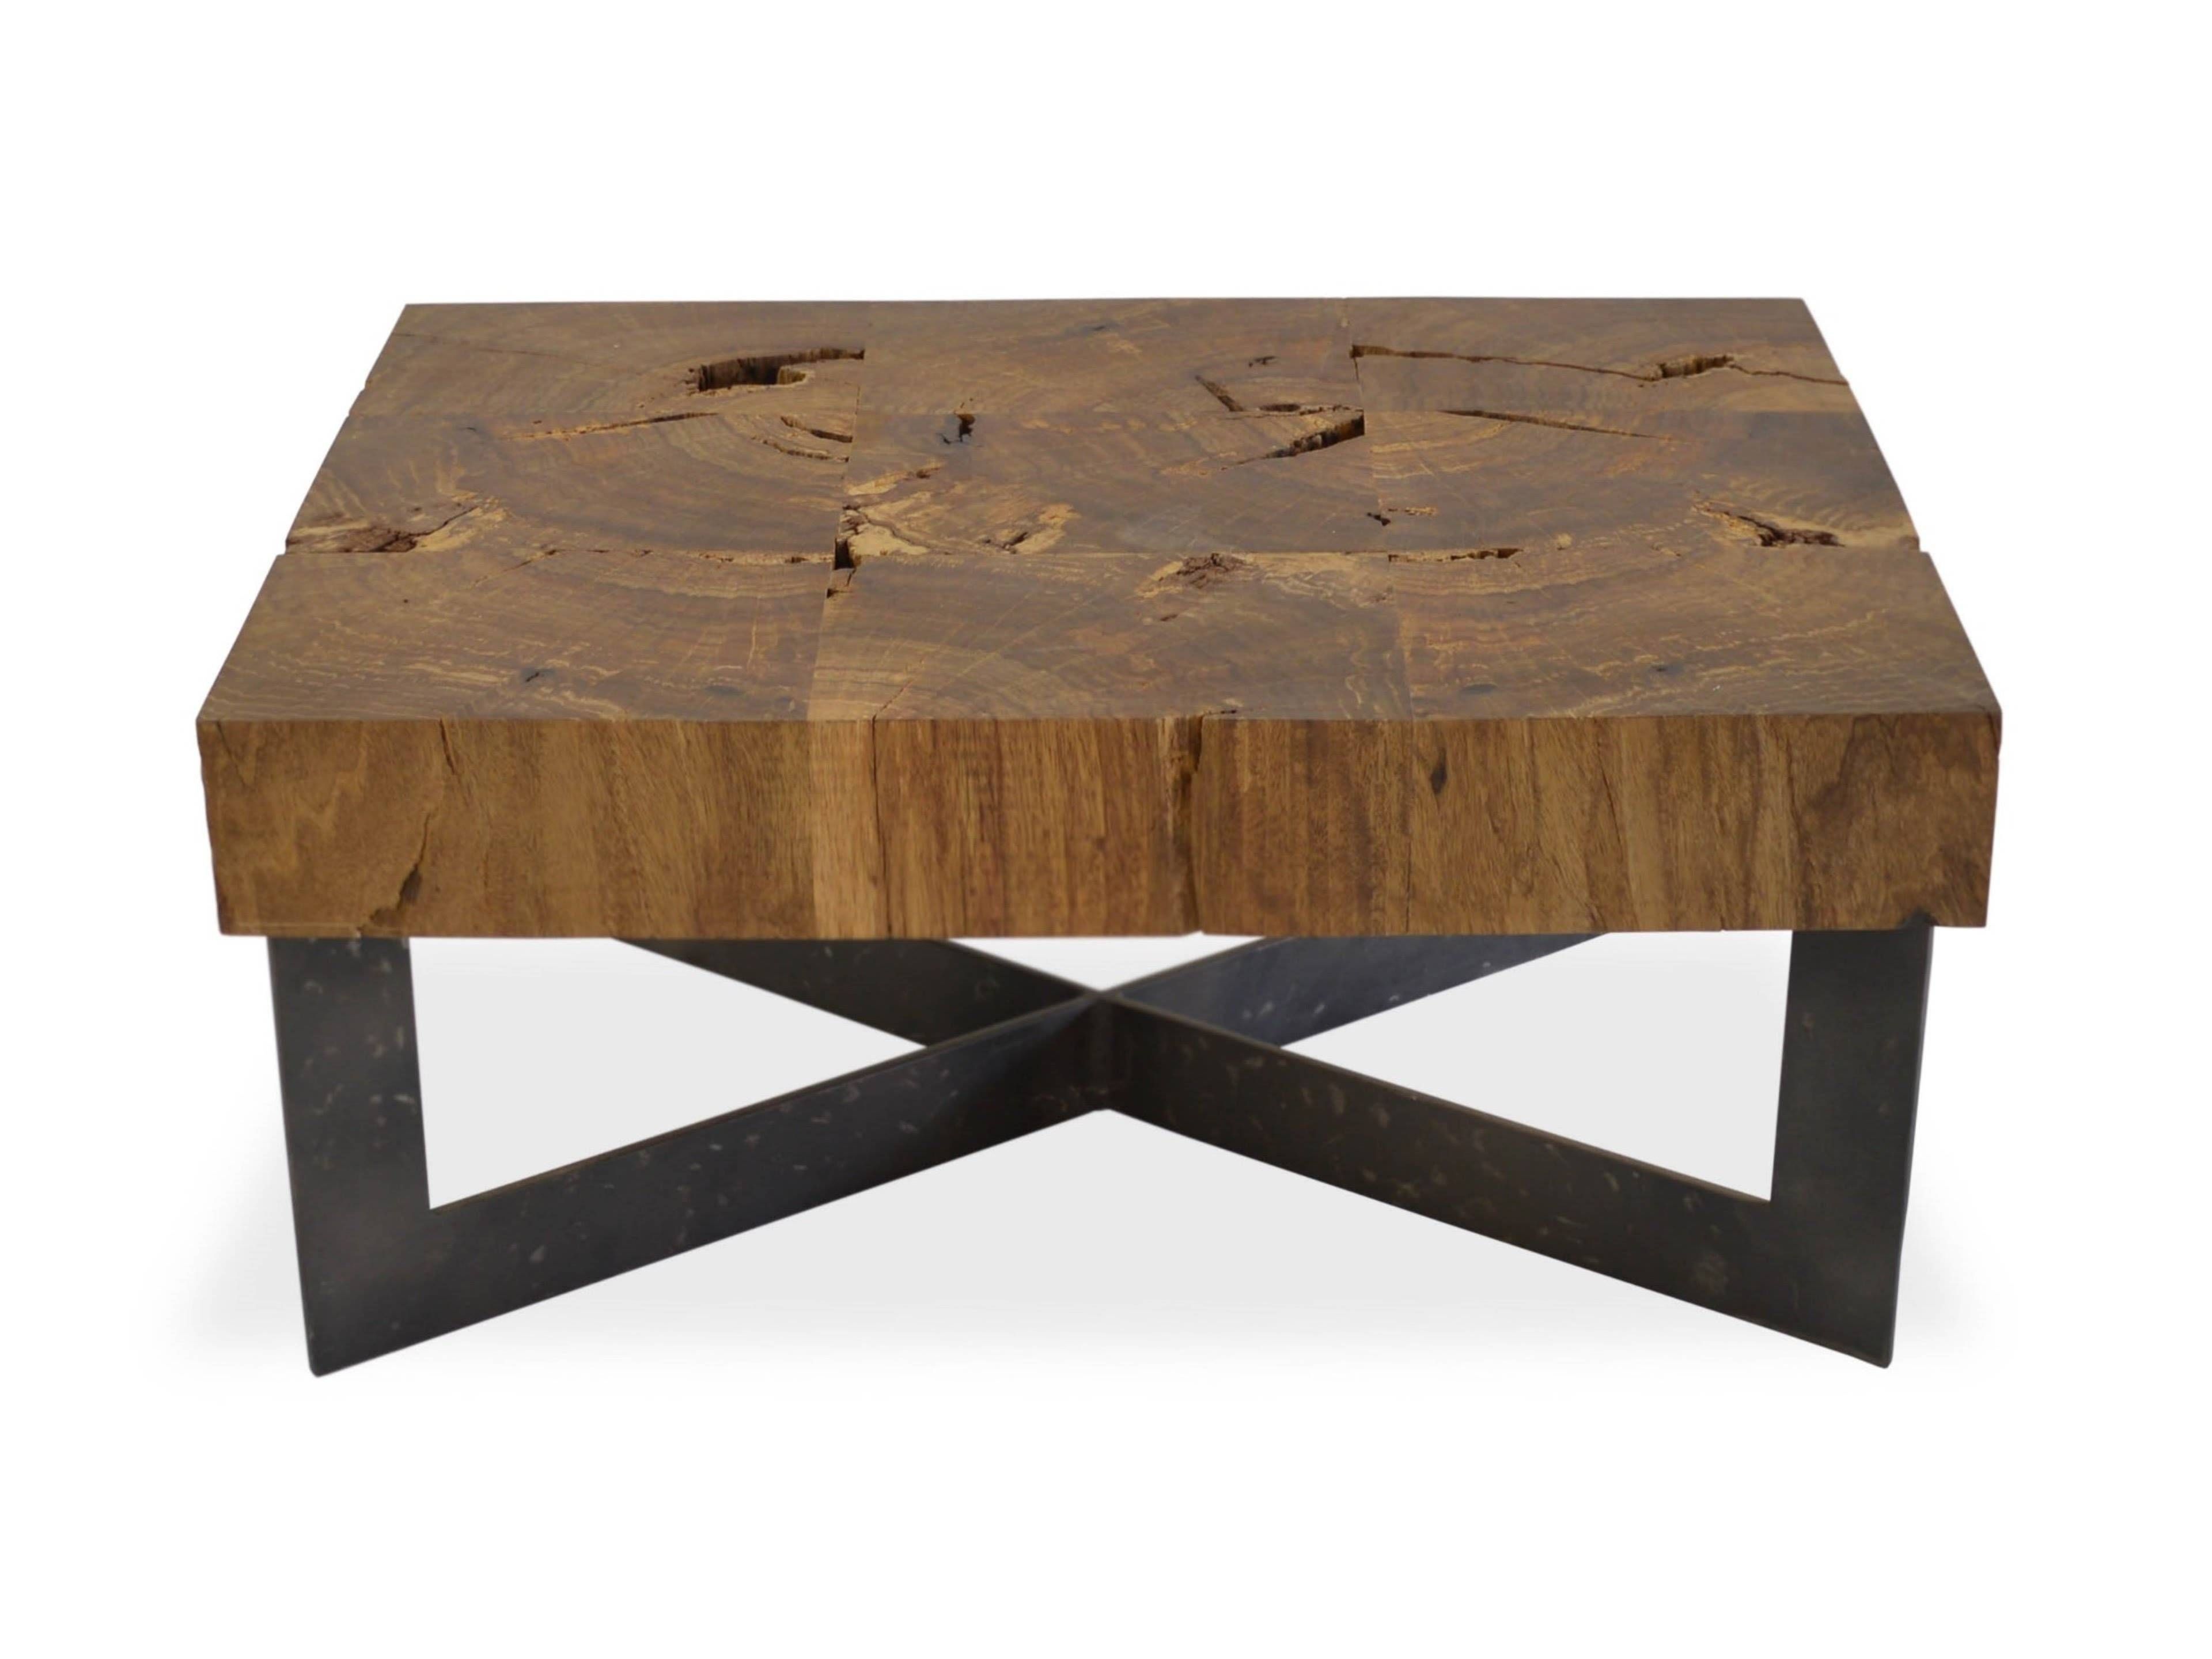 Creative Steel And Refurbished Wood Coffee Table – Youtube With Steel And Wood Coffee Tables (View 4 of 15)